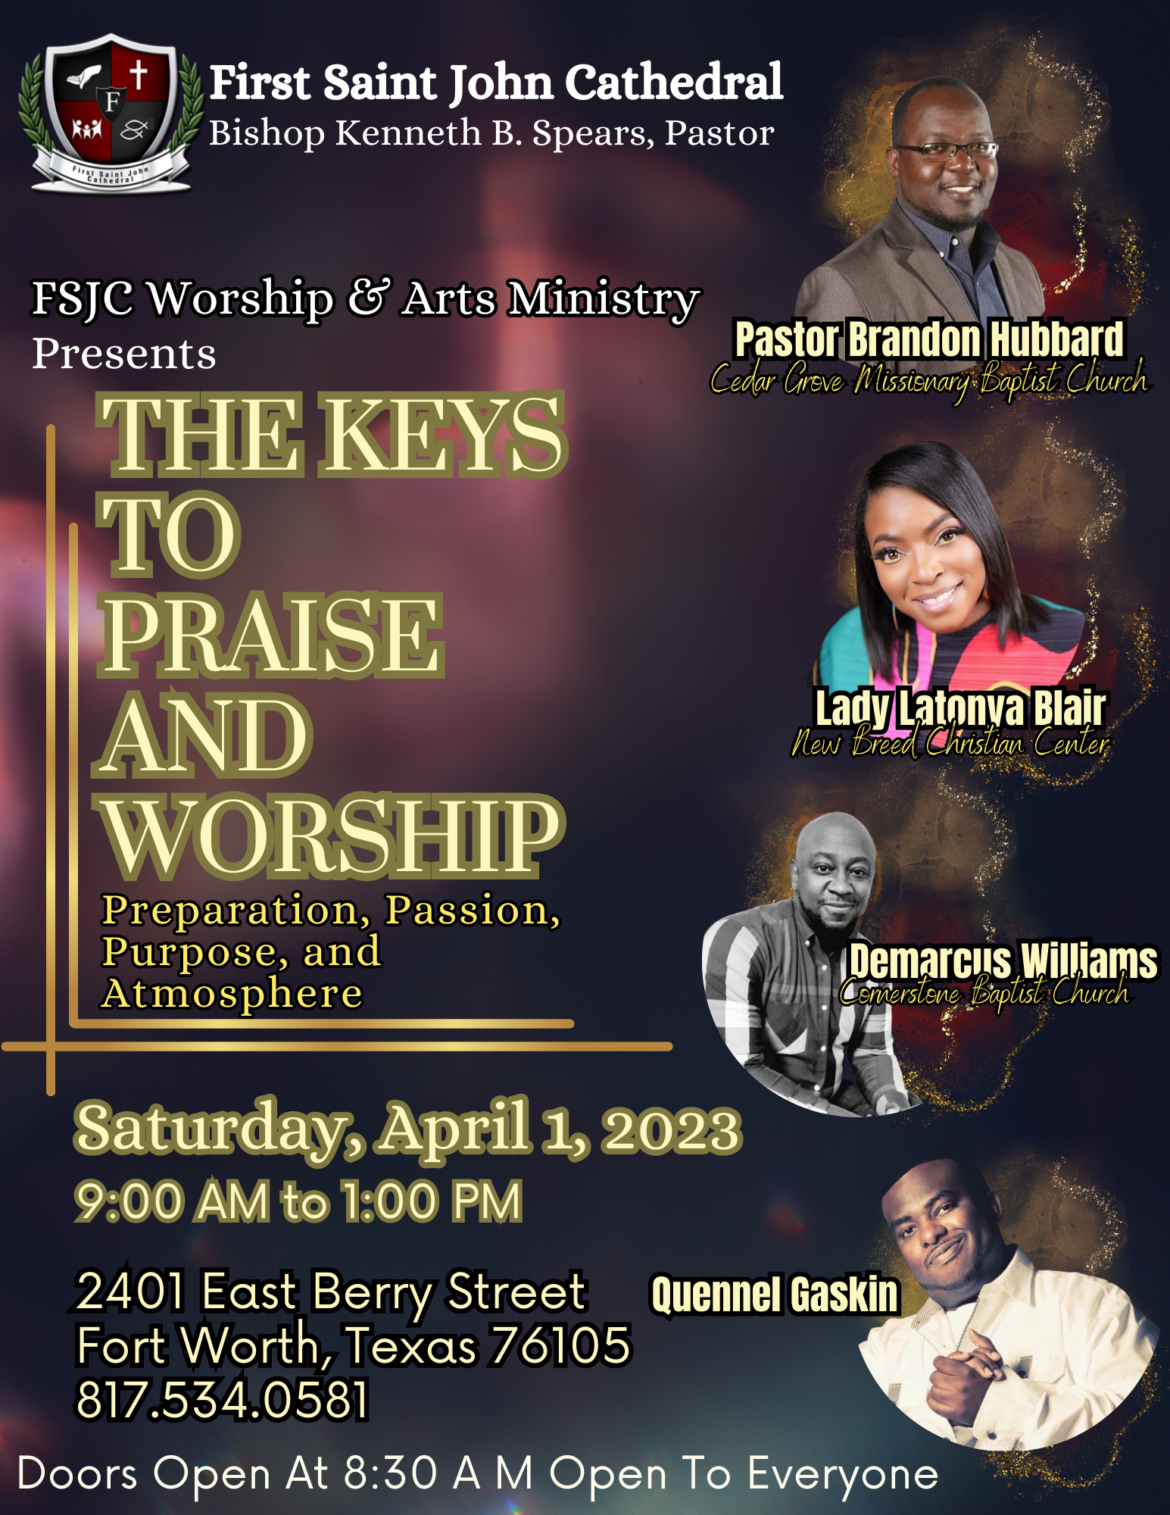 FSJC Worship & Arts Ministry Music Workshop